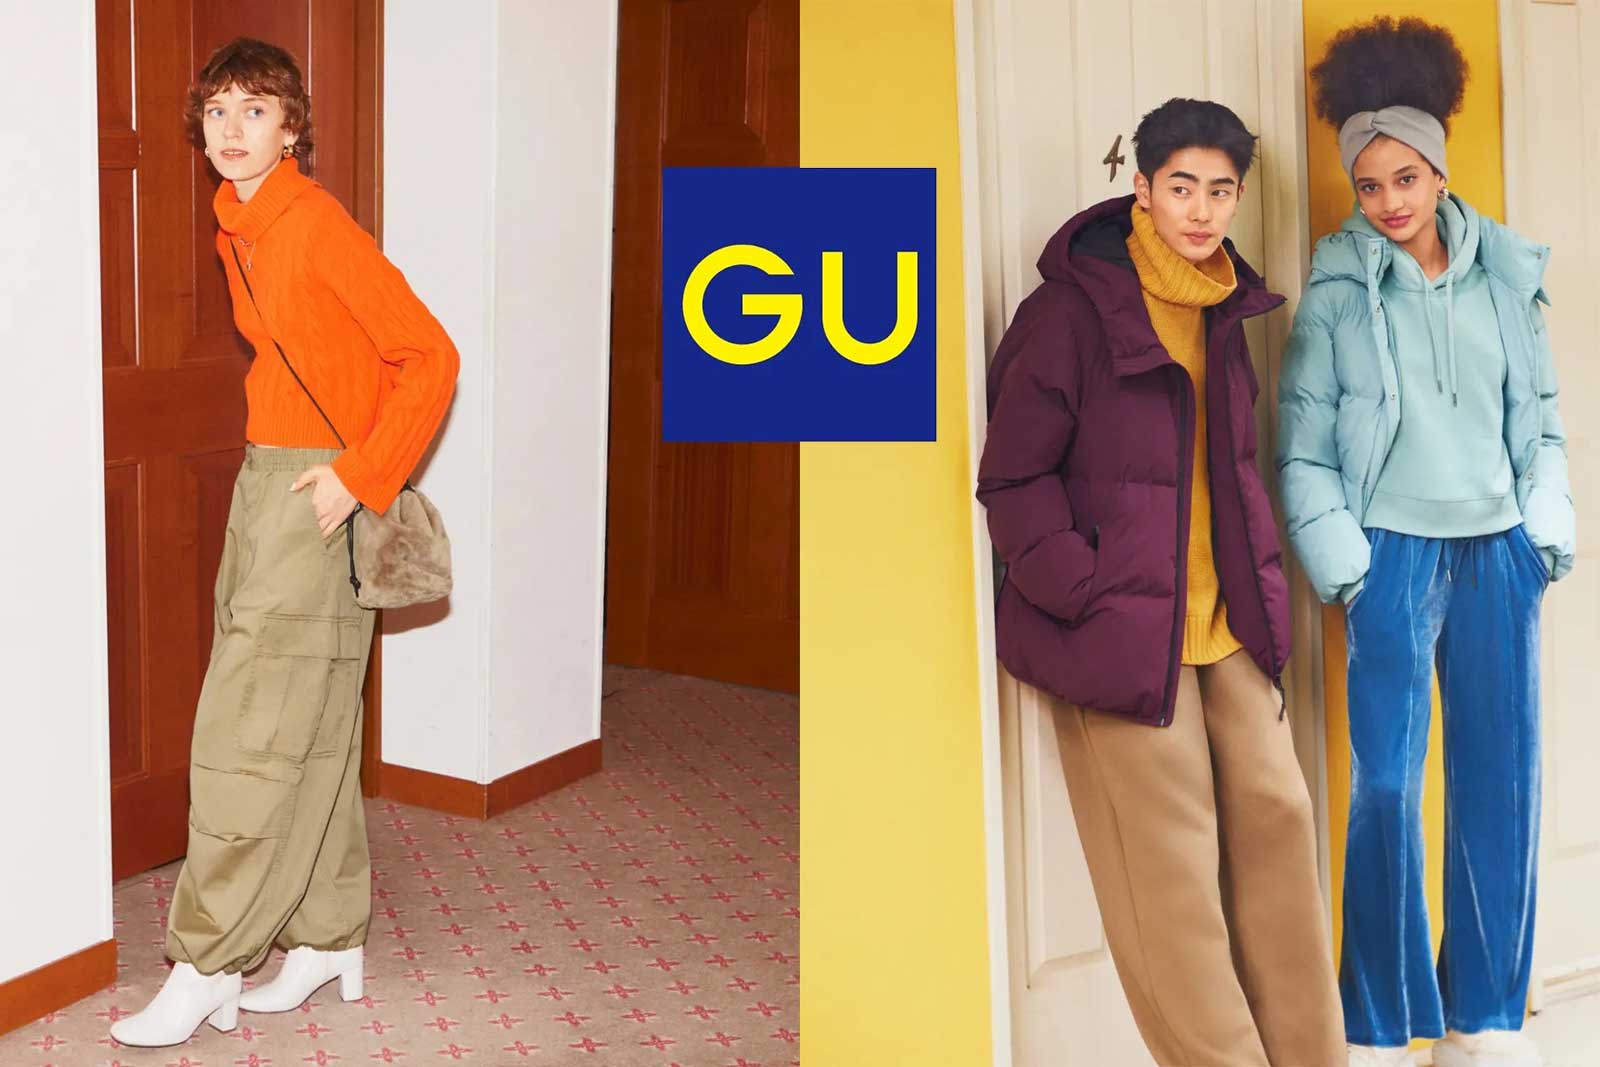 gu-clothing-brand-store-new-york-uniqlo (111233)